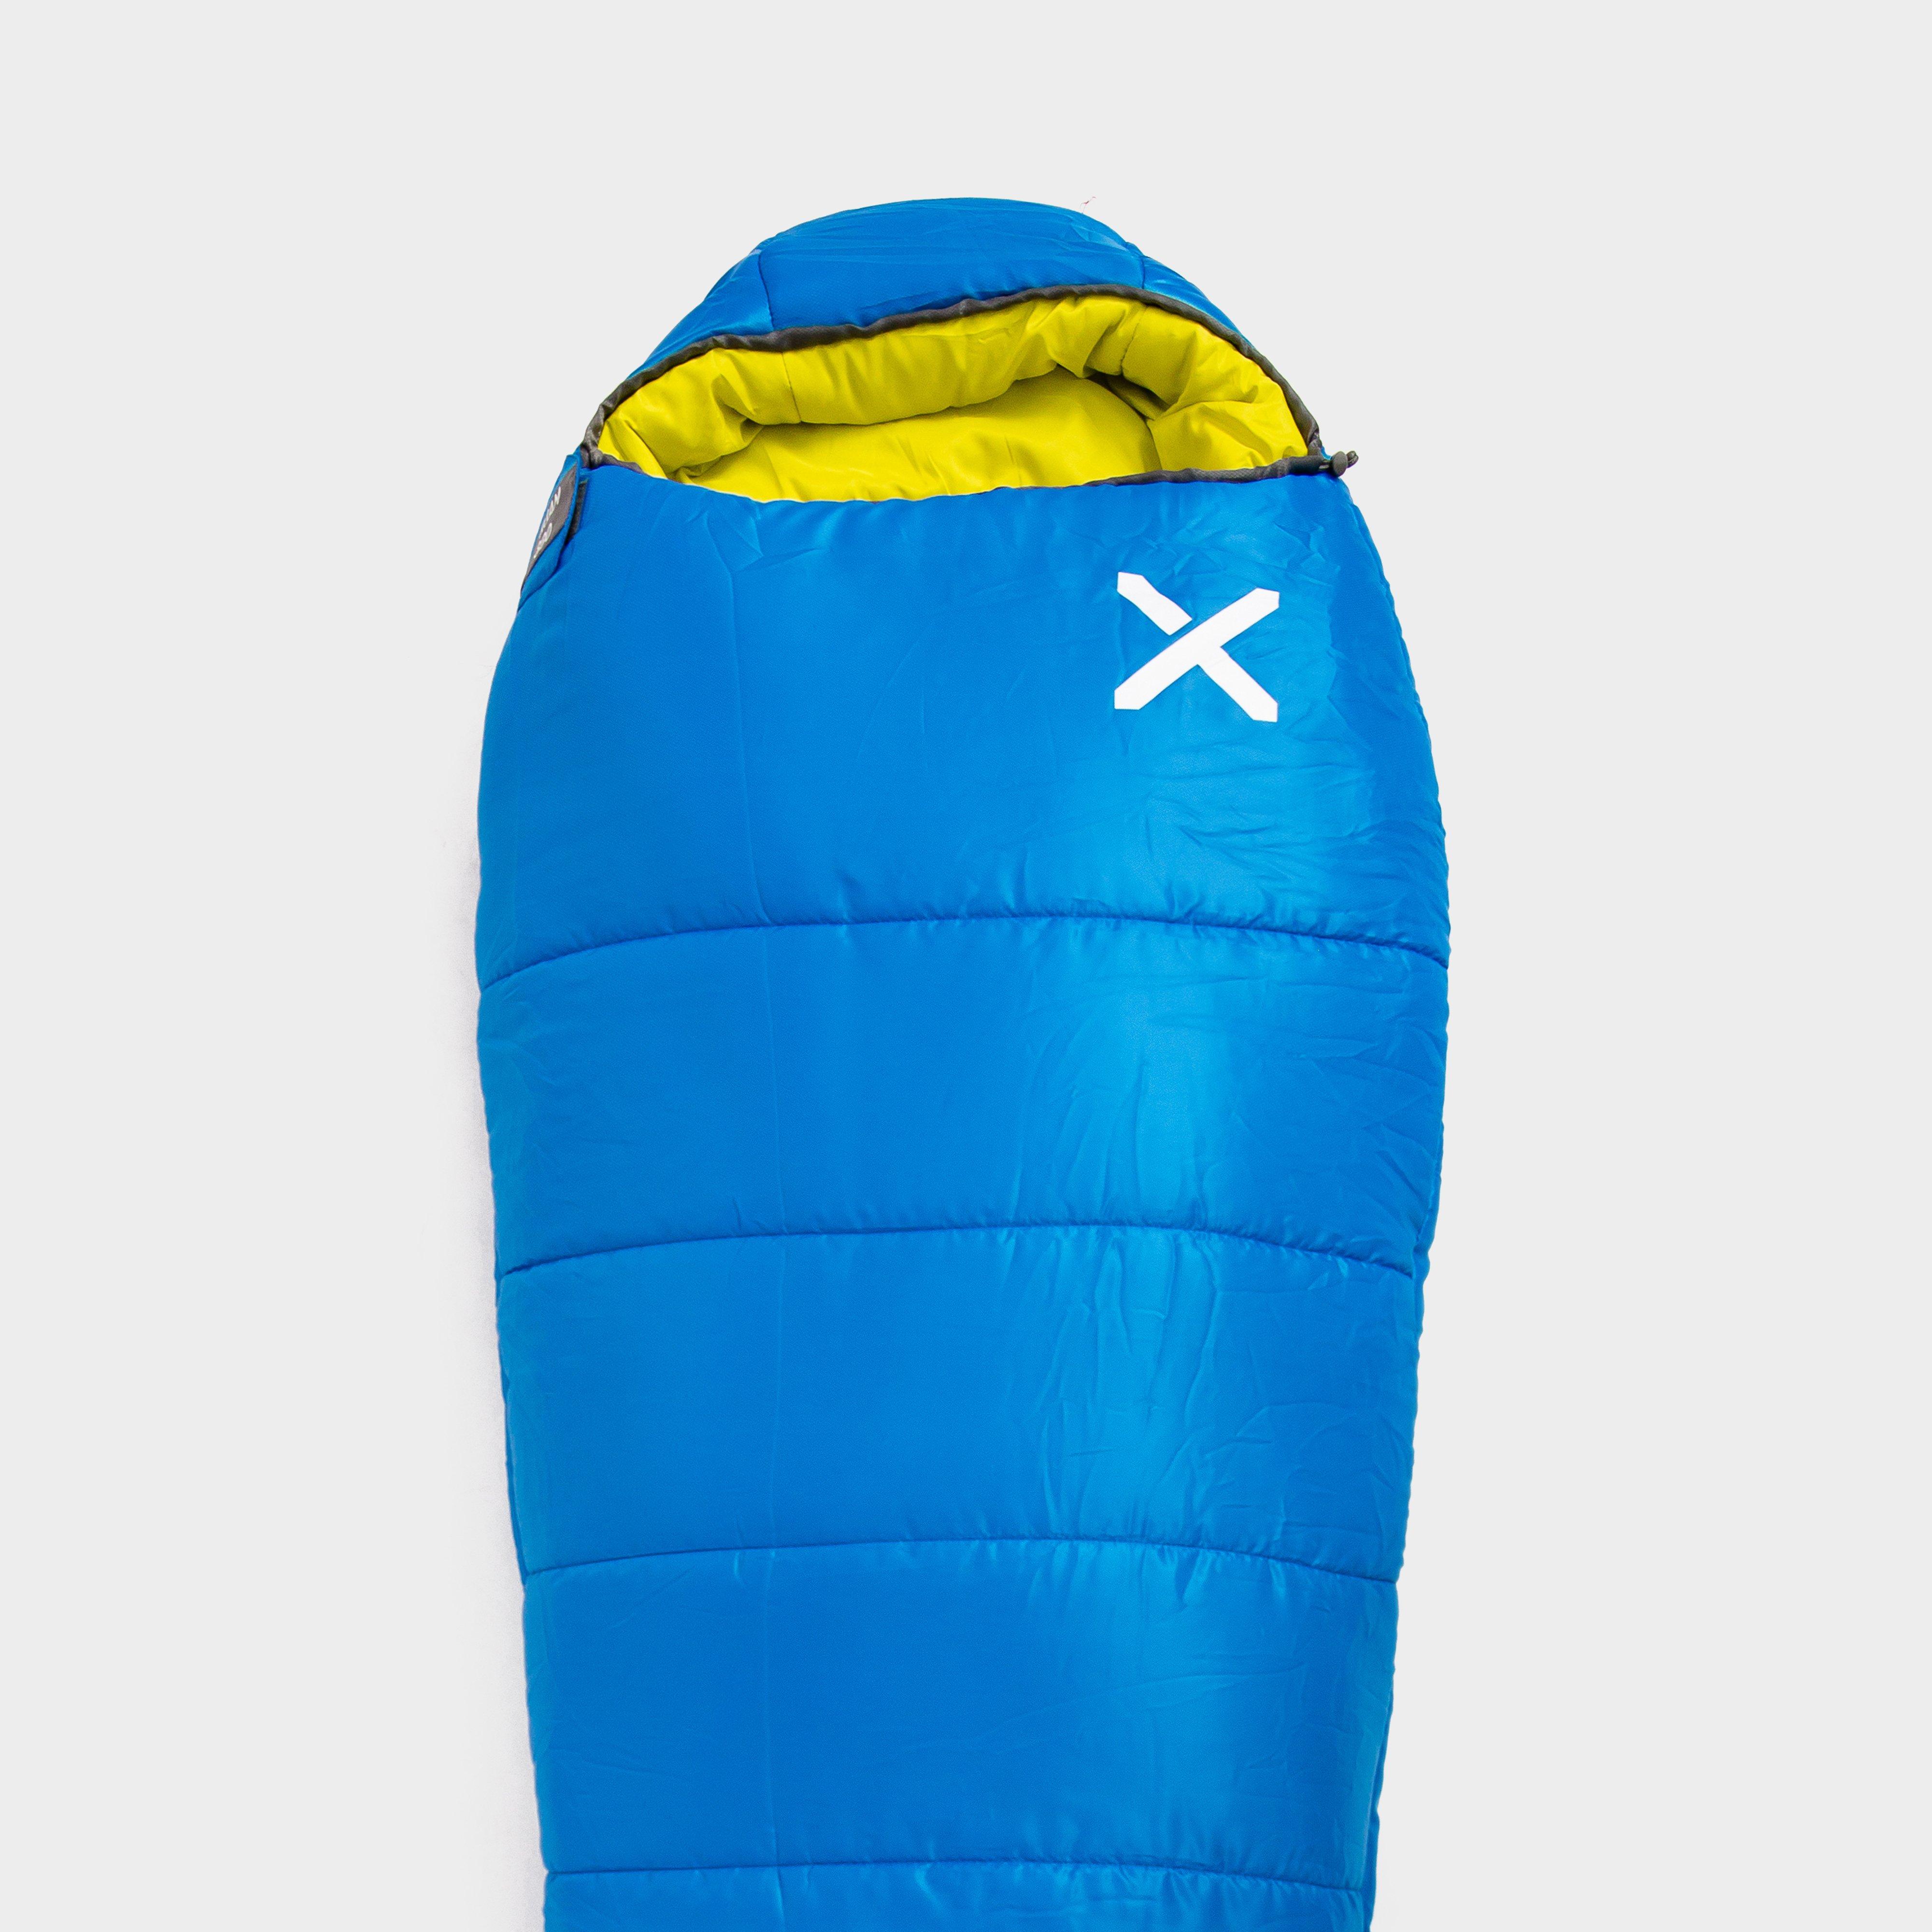 OEX Oex Roam 300 Sleeping Bag - Blue, Blue